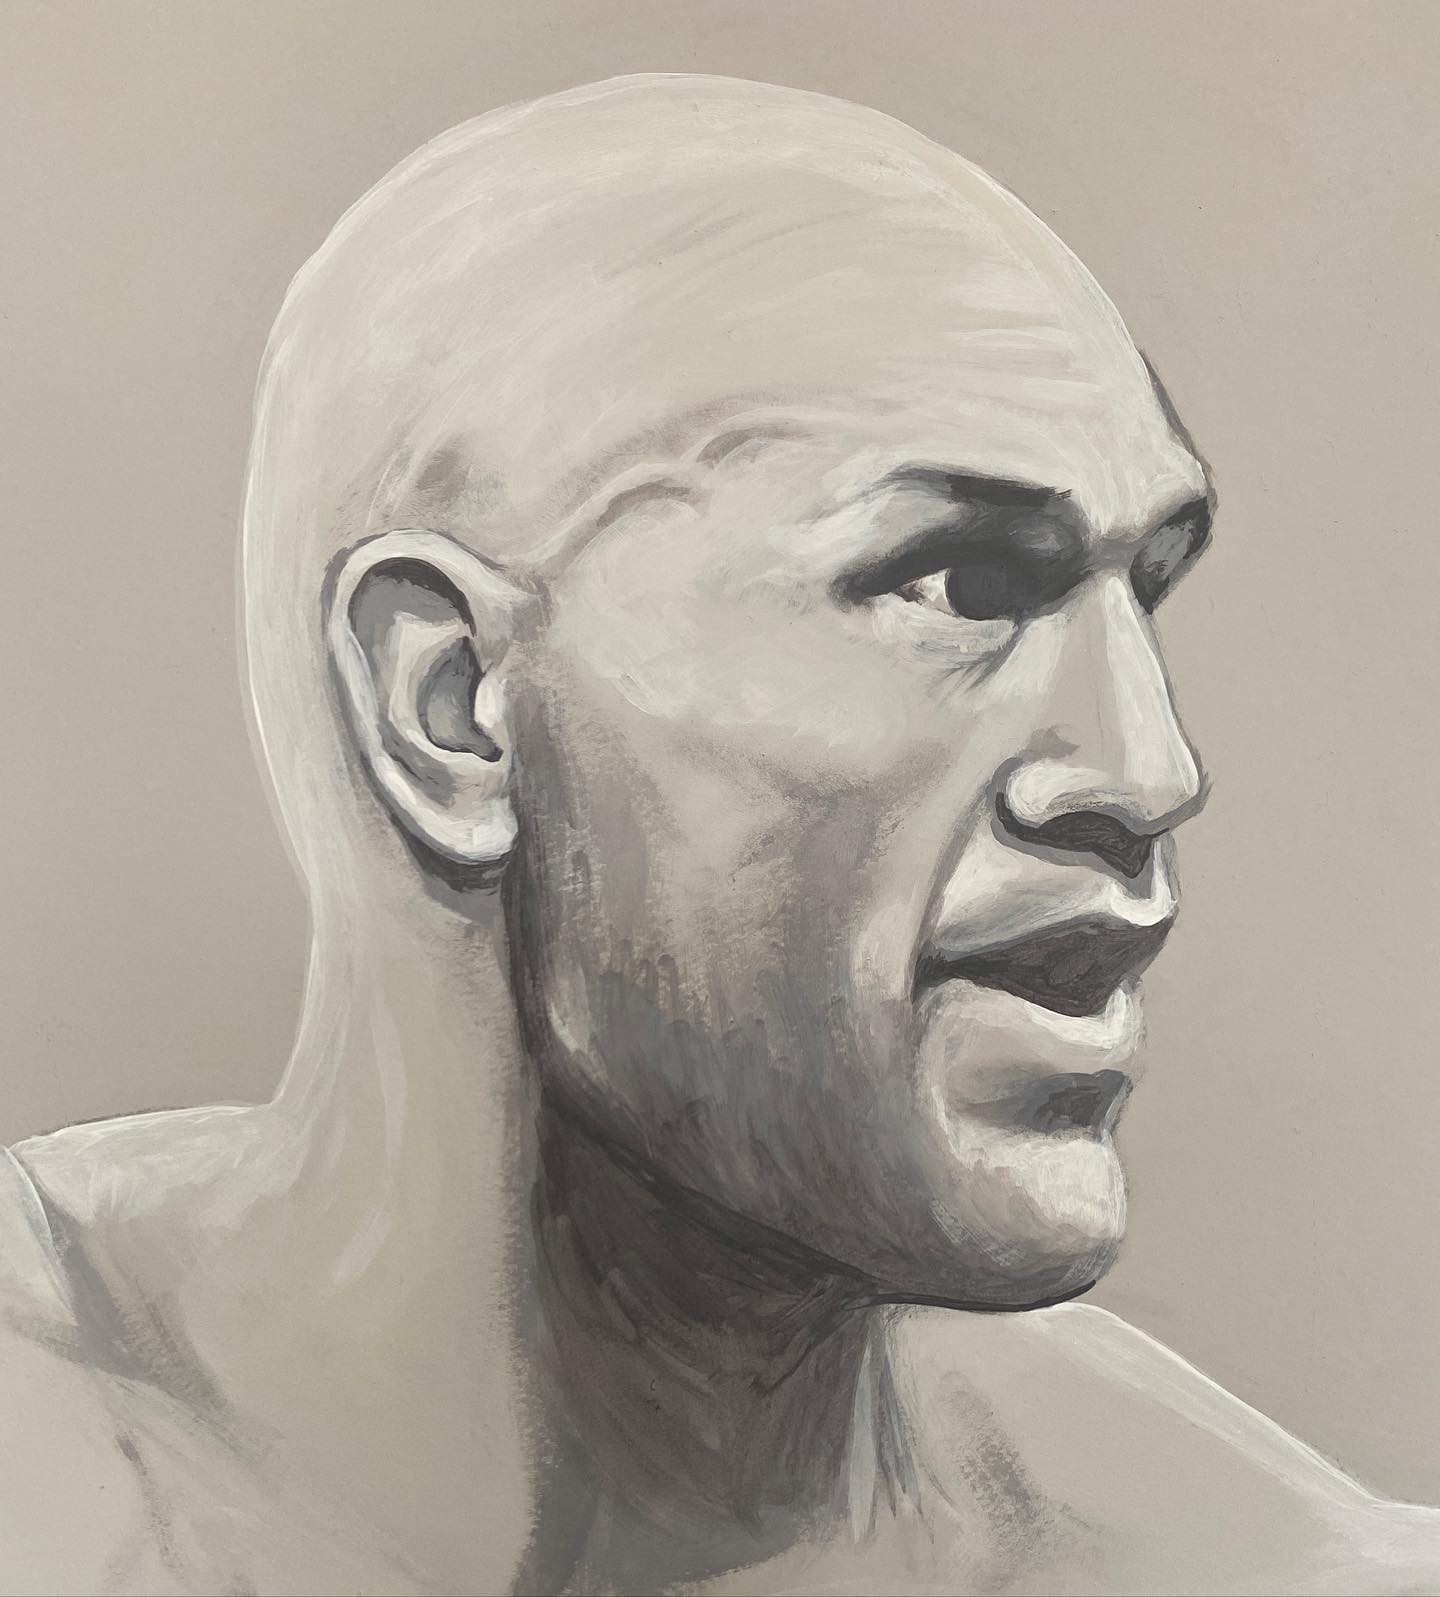 Tyson Fury detail on 3 legends mural